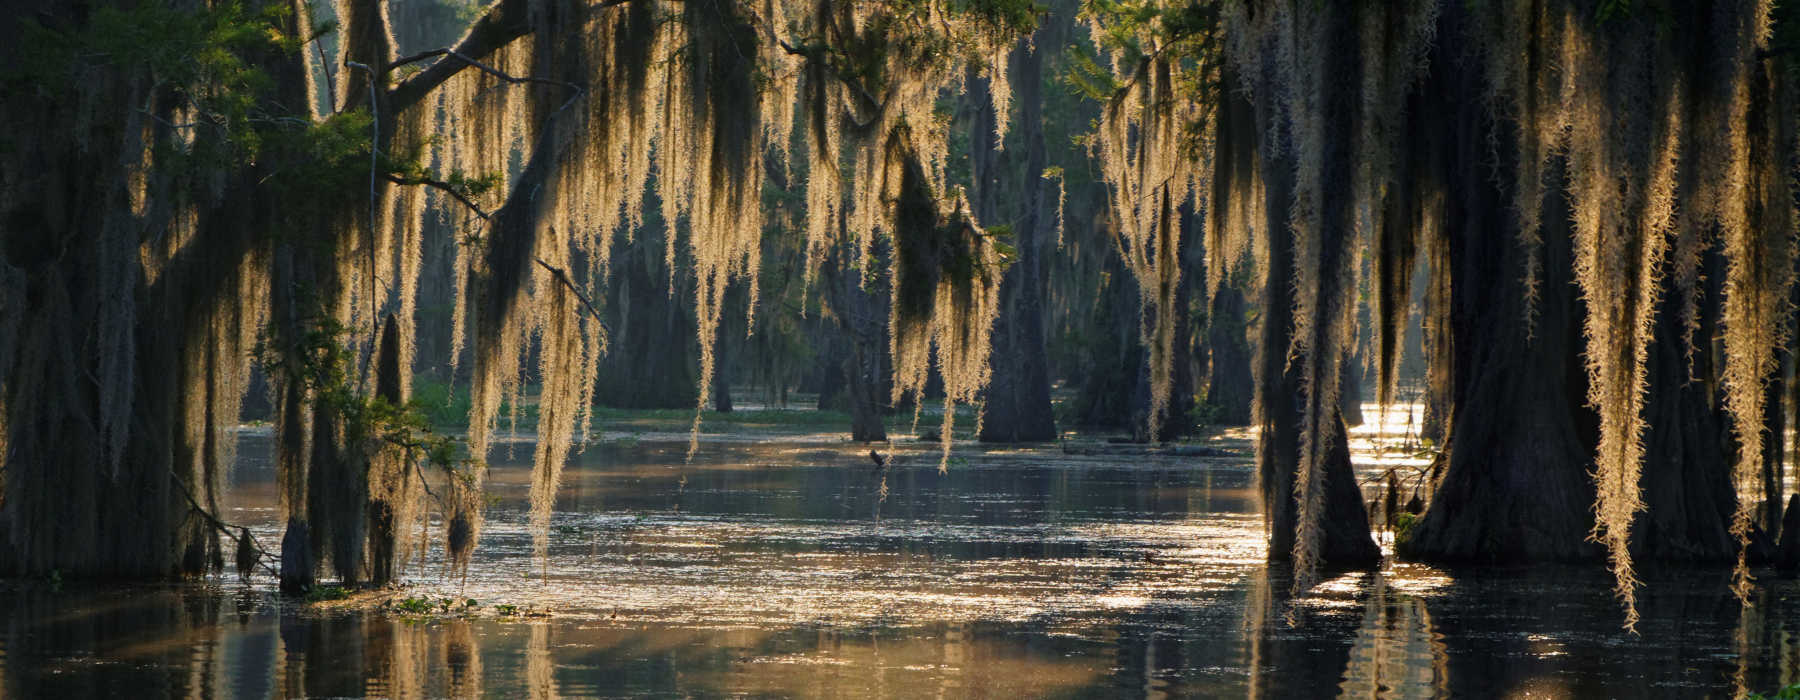 Louisiana and the Deep South<br class="hidden-md hidden-lg" /> Holidays